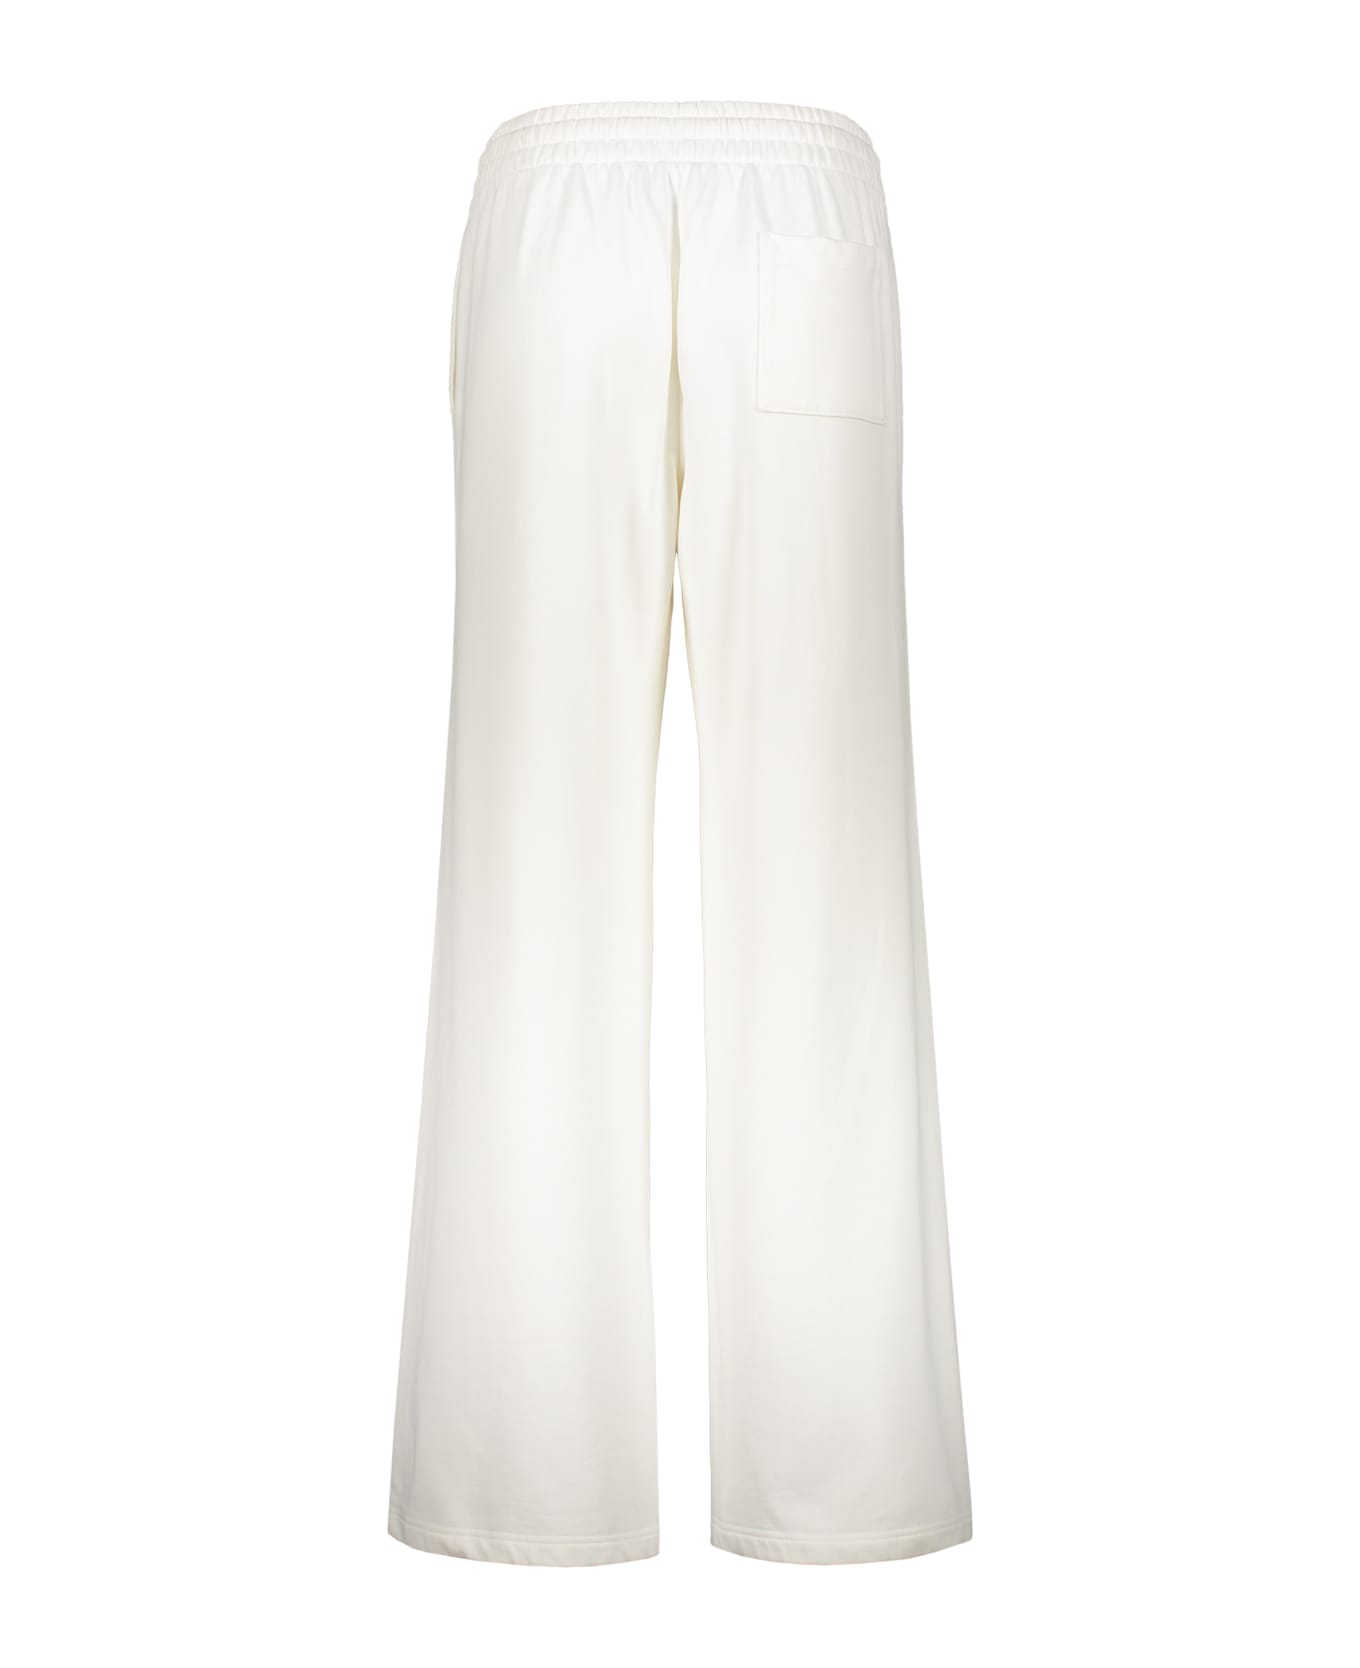 Casablanca White Cotton Pants - White ボトムス